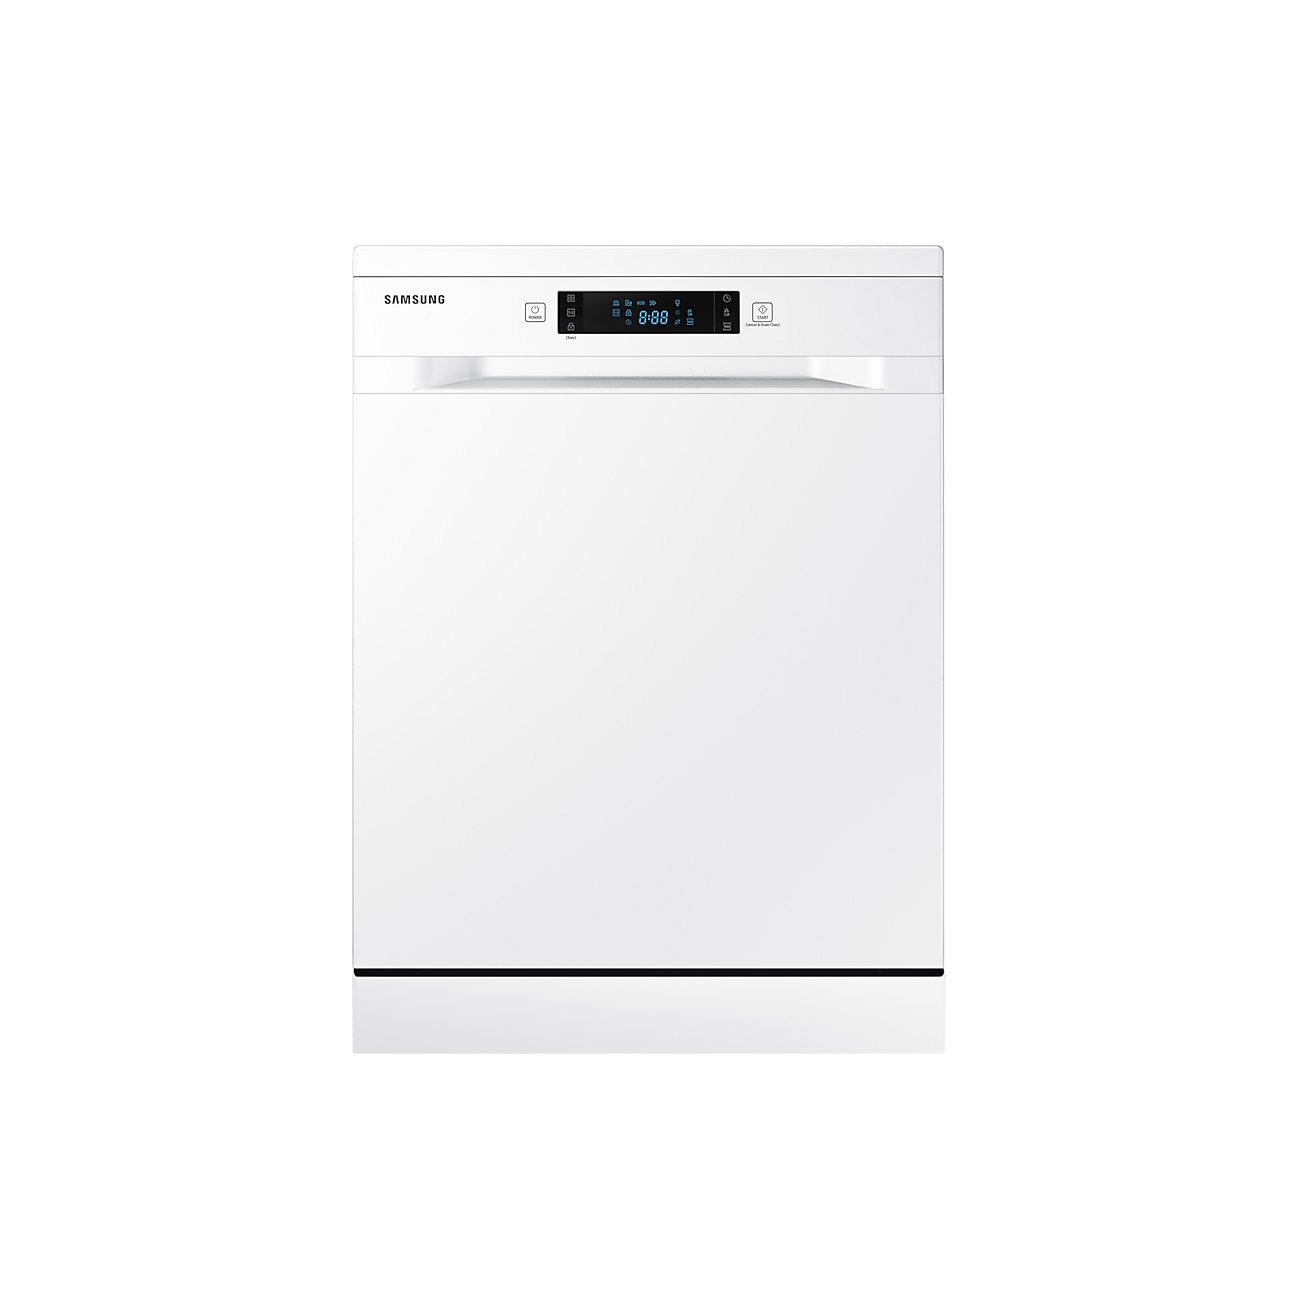 Samsung Series 5 DW60M5050FW Standard Dishwasher - White - F Rated